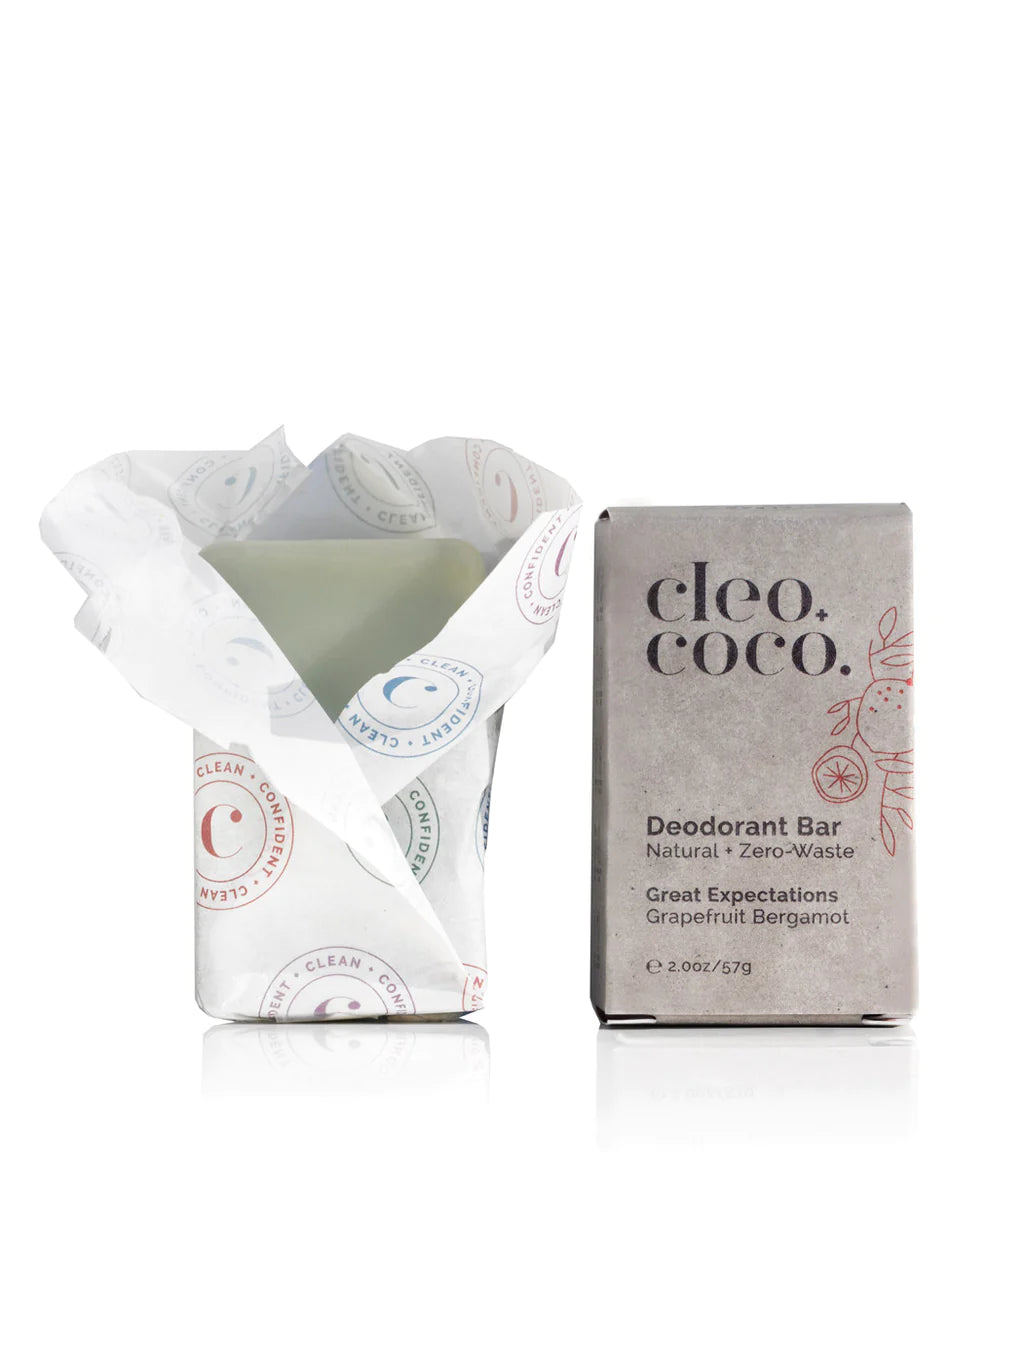 Cleo+Coco ZERO-WASTE DEODORANT BAR Great Expectations Grapefruit Bergamot